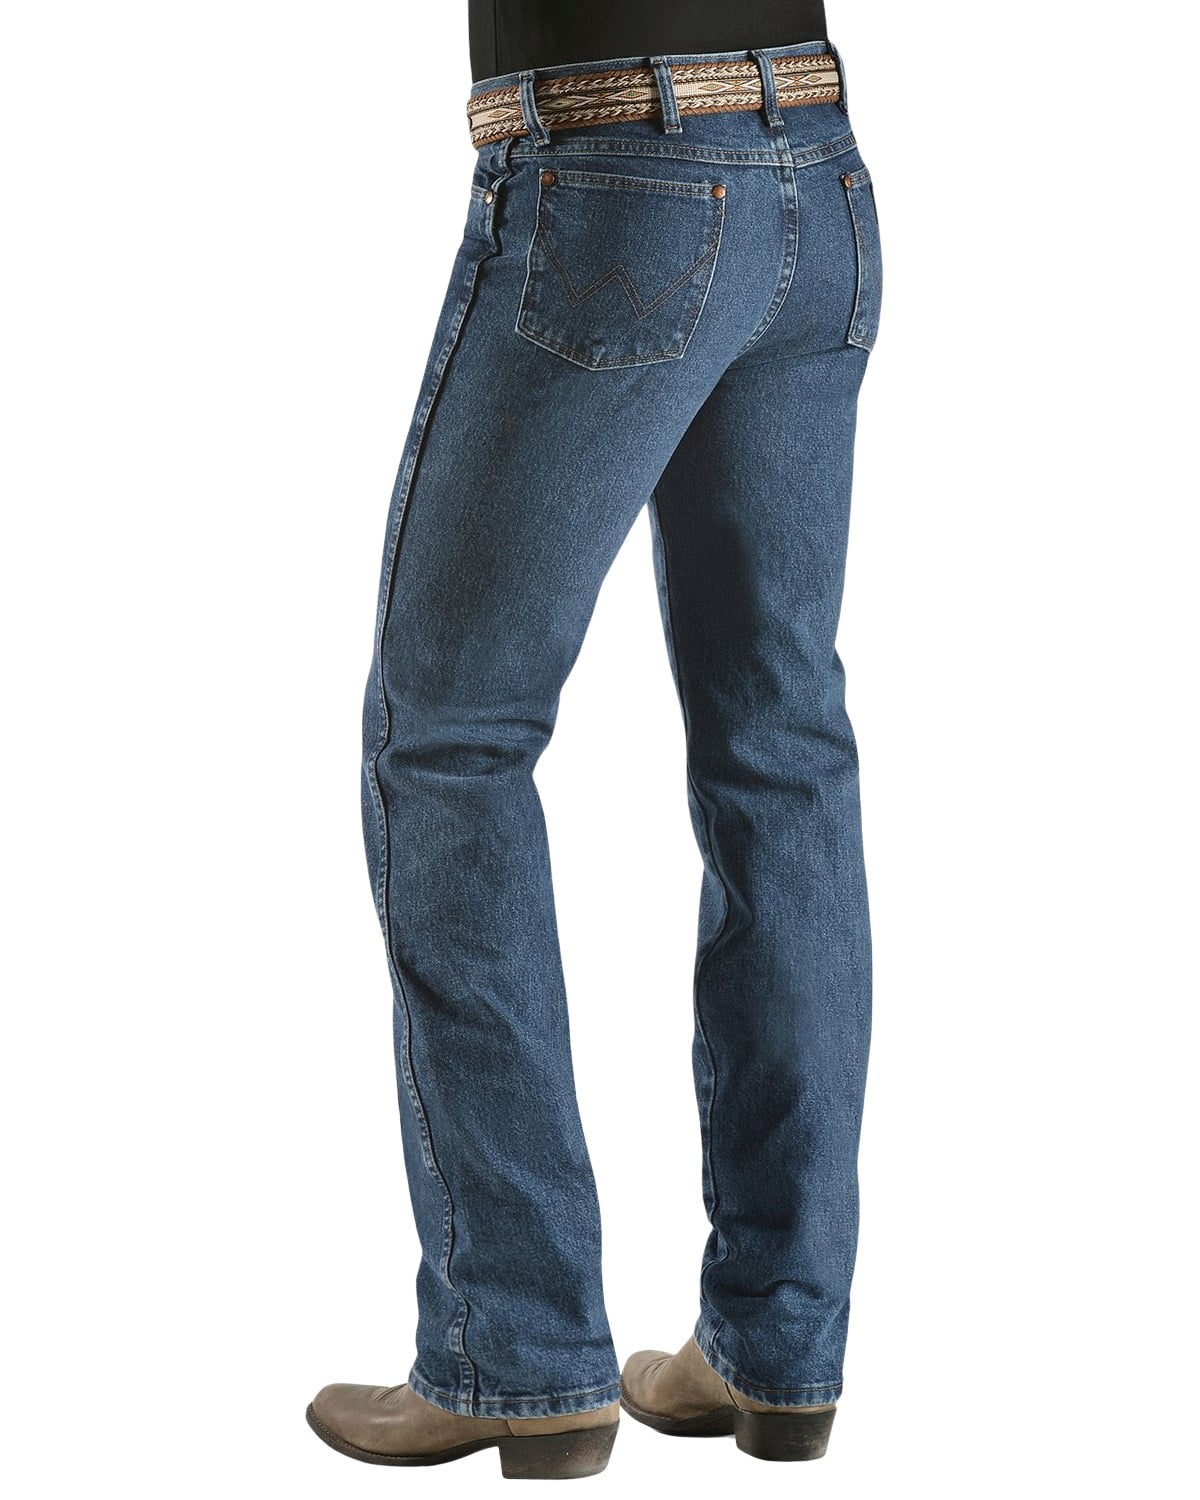 Wrangler 936 Cowboy Cut Rigid Slim Fit Jeans